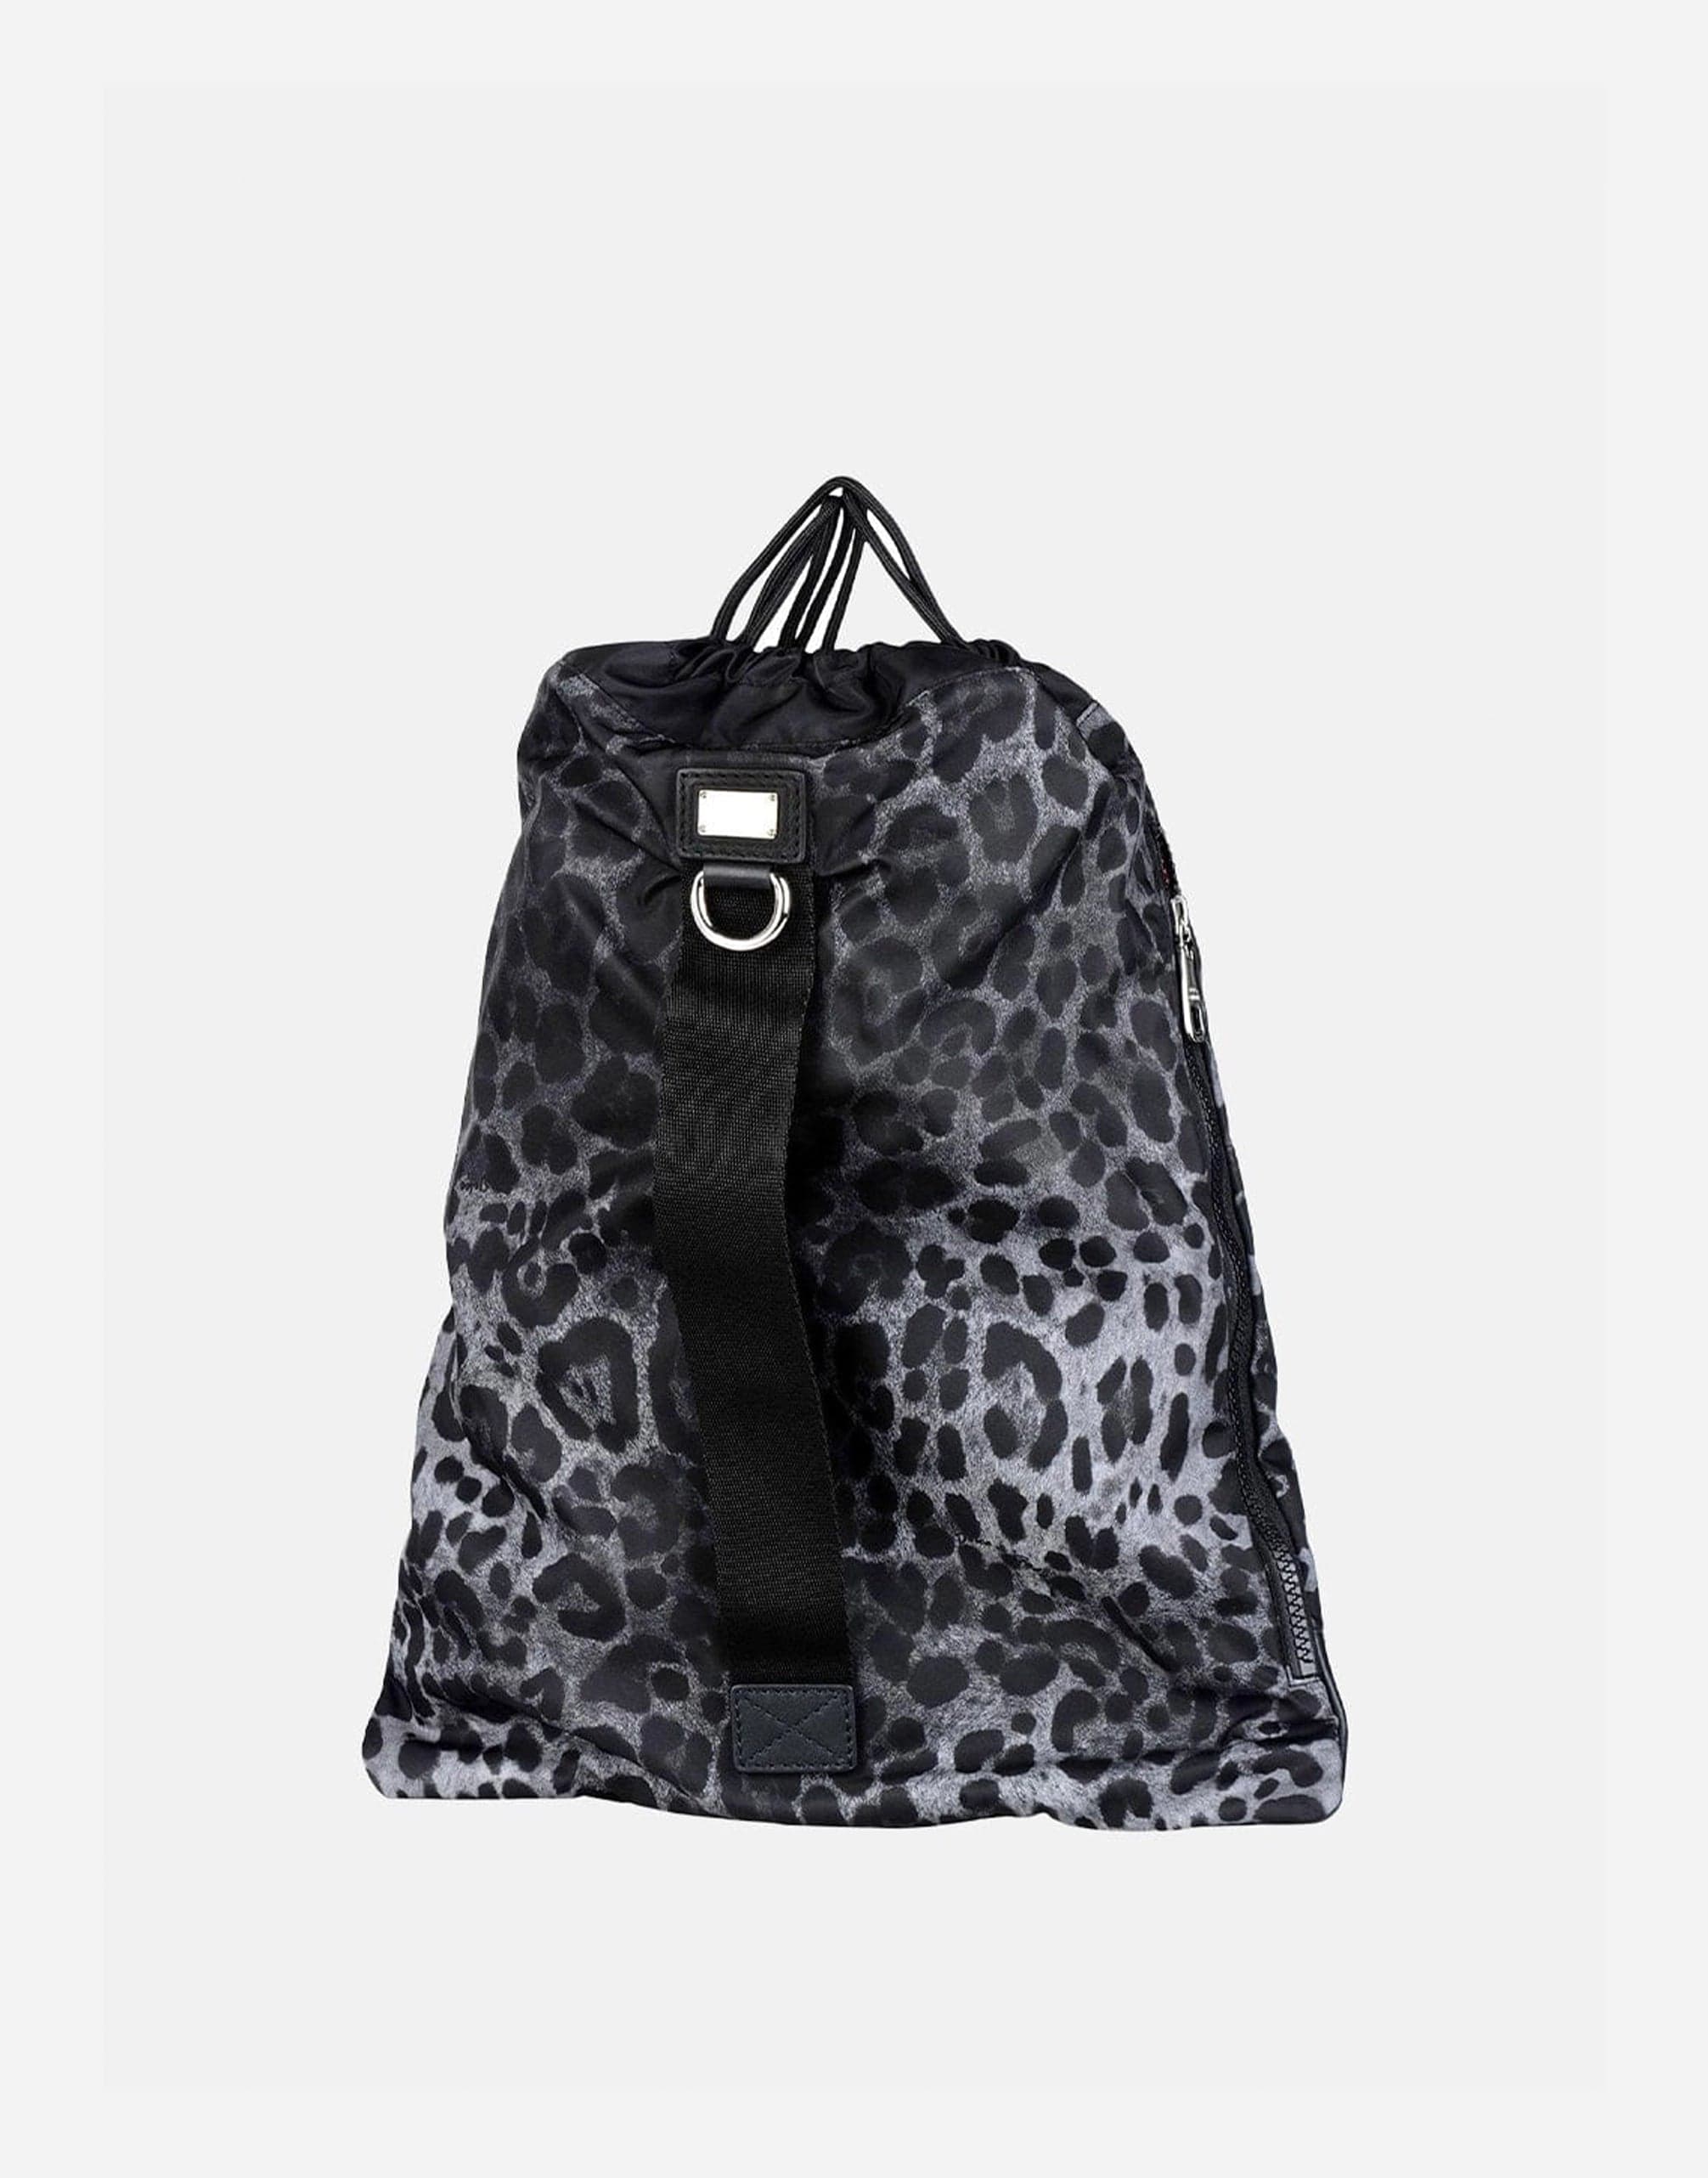 Dolce & Gabbana Leopard Print Drawstring Backpack